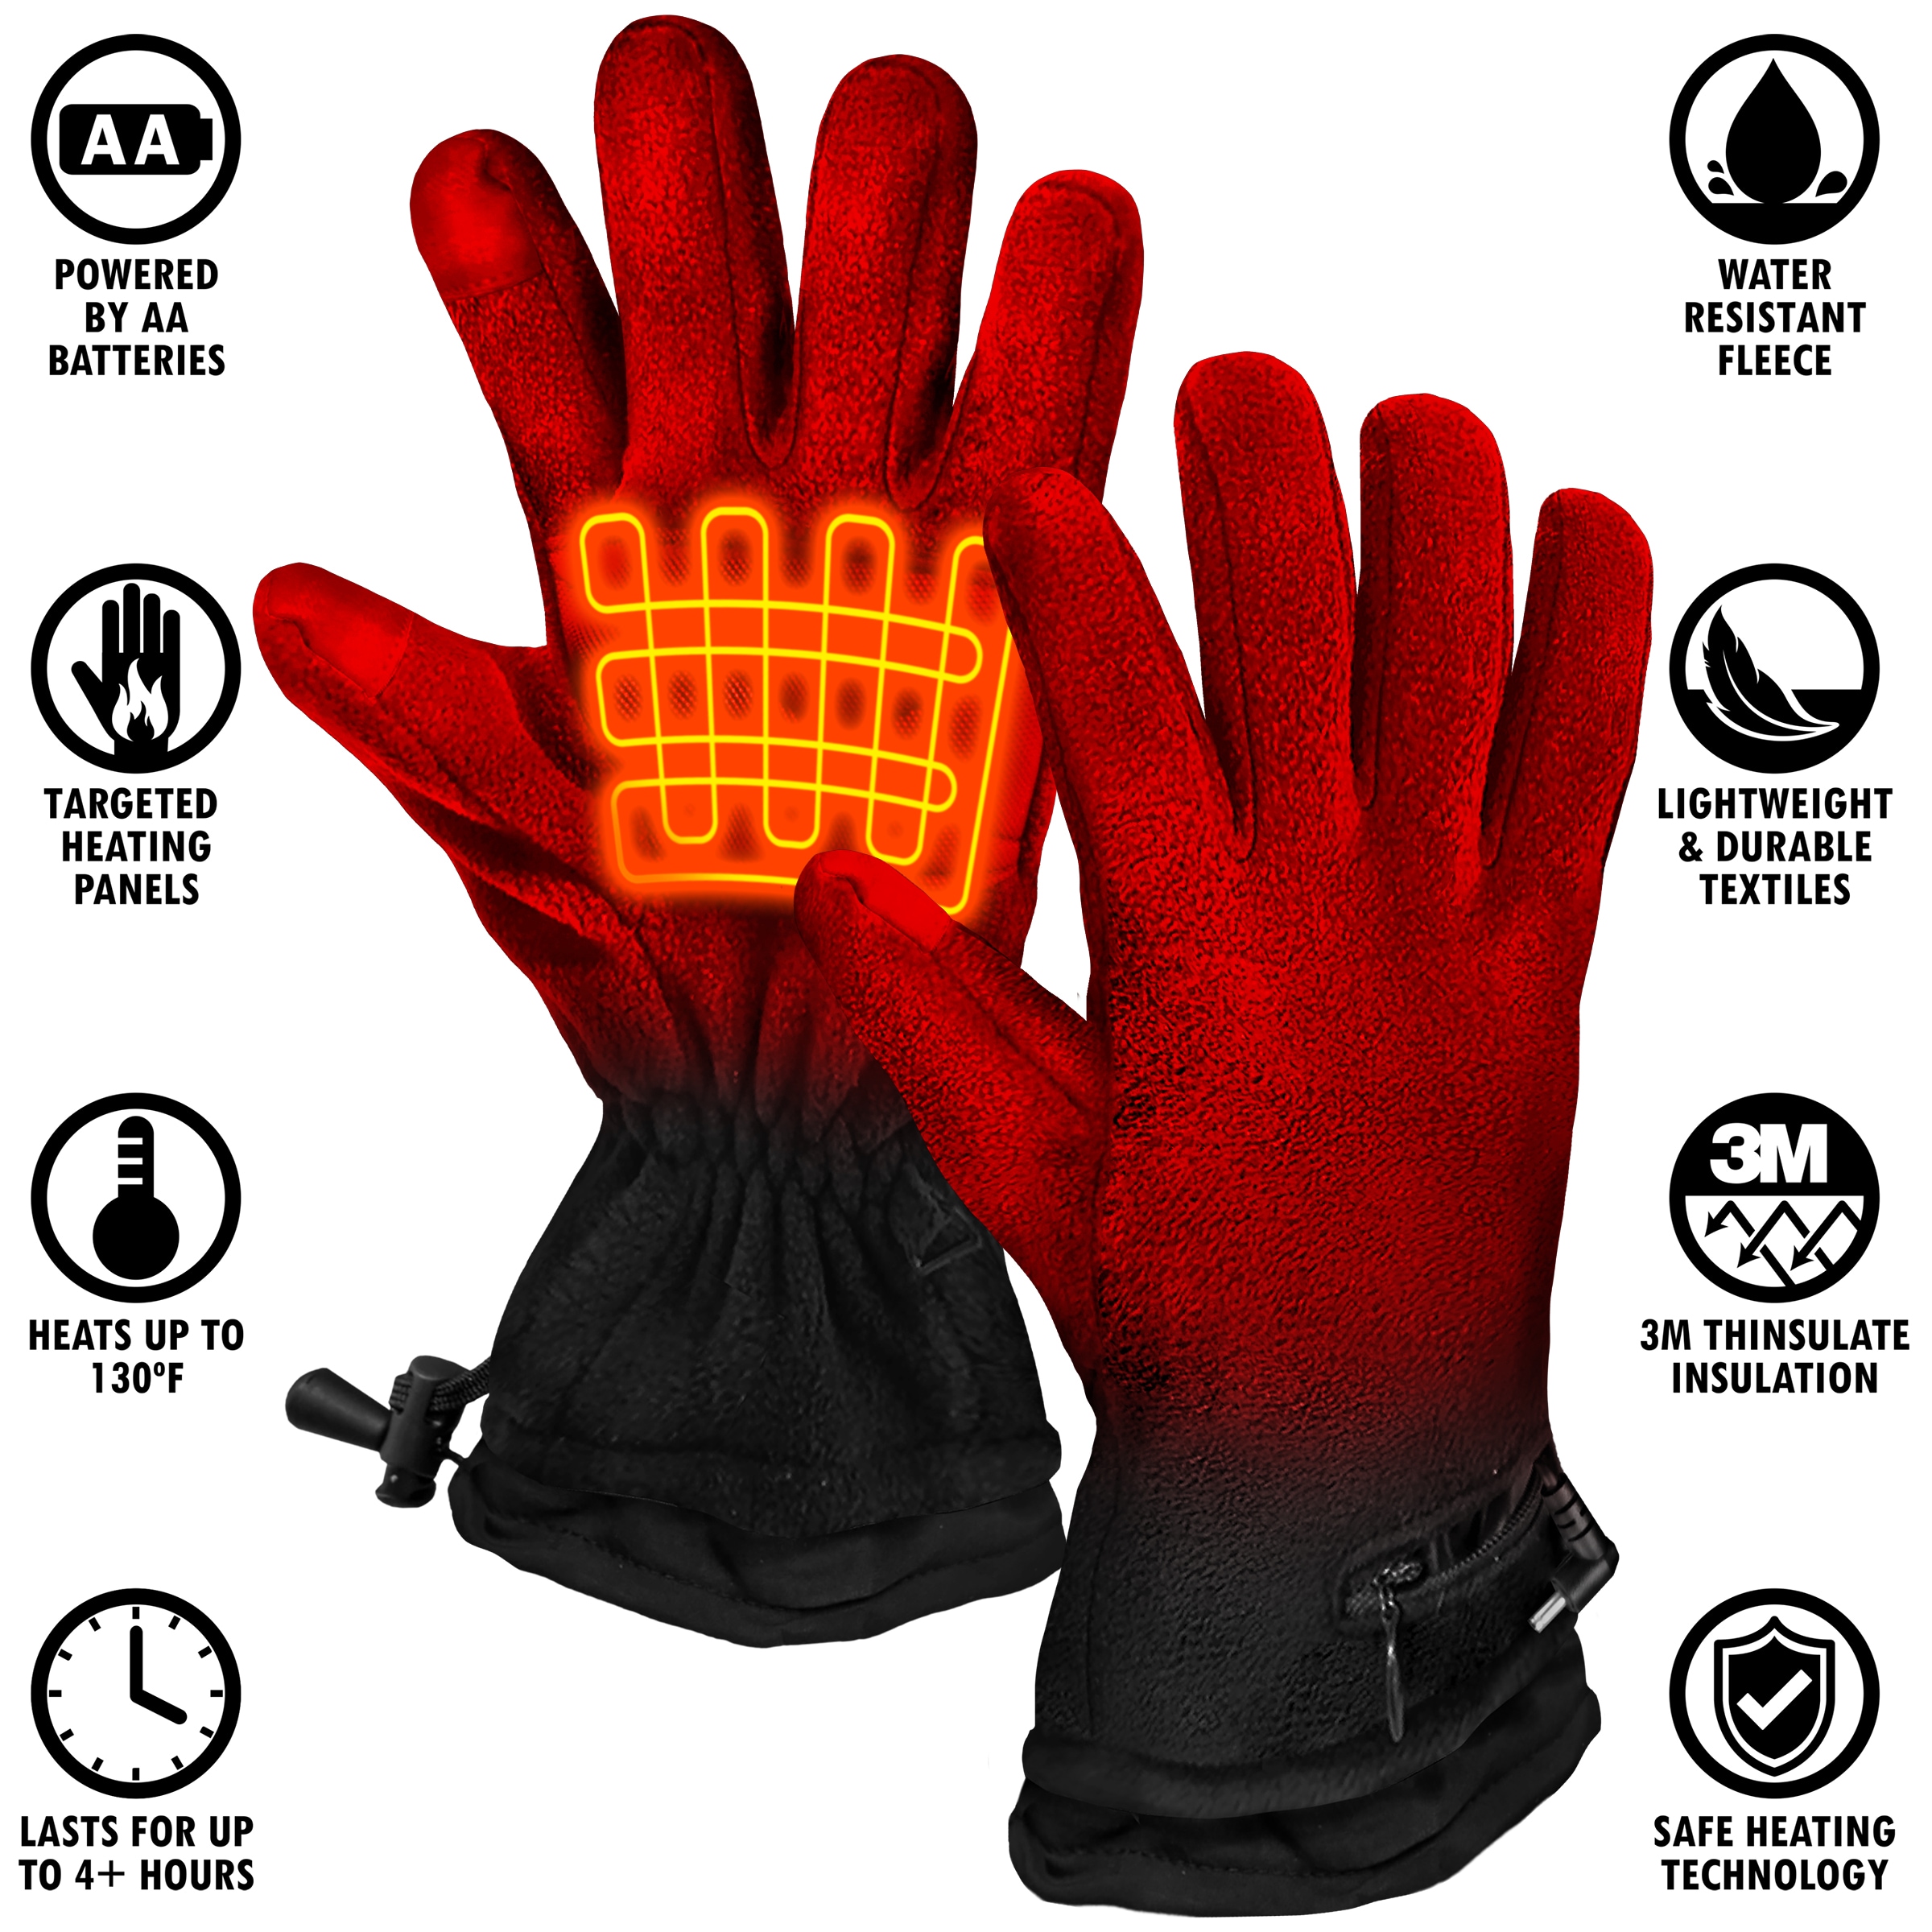 Microfiber Gloves (1 pair) size M (7/8) black